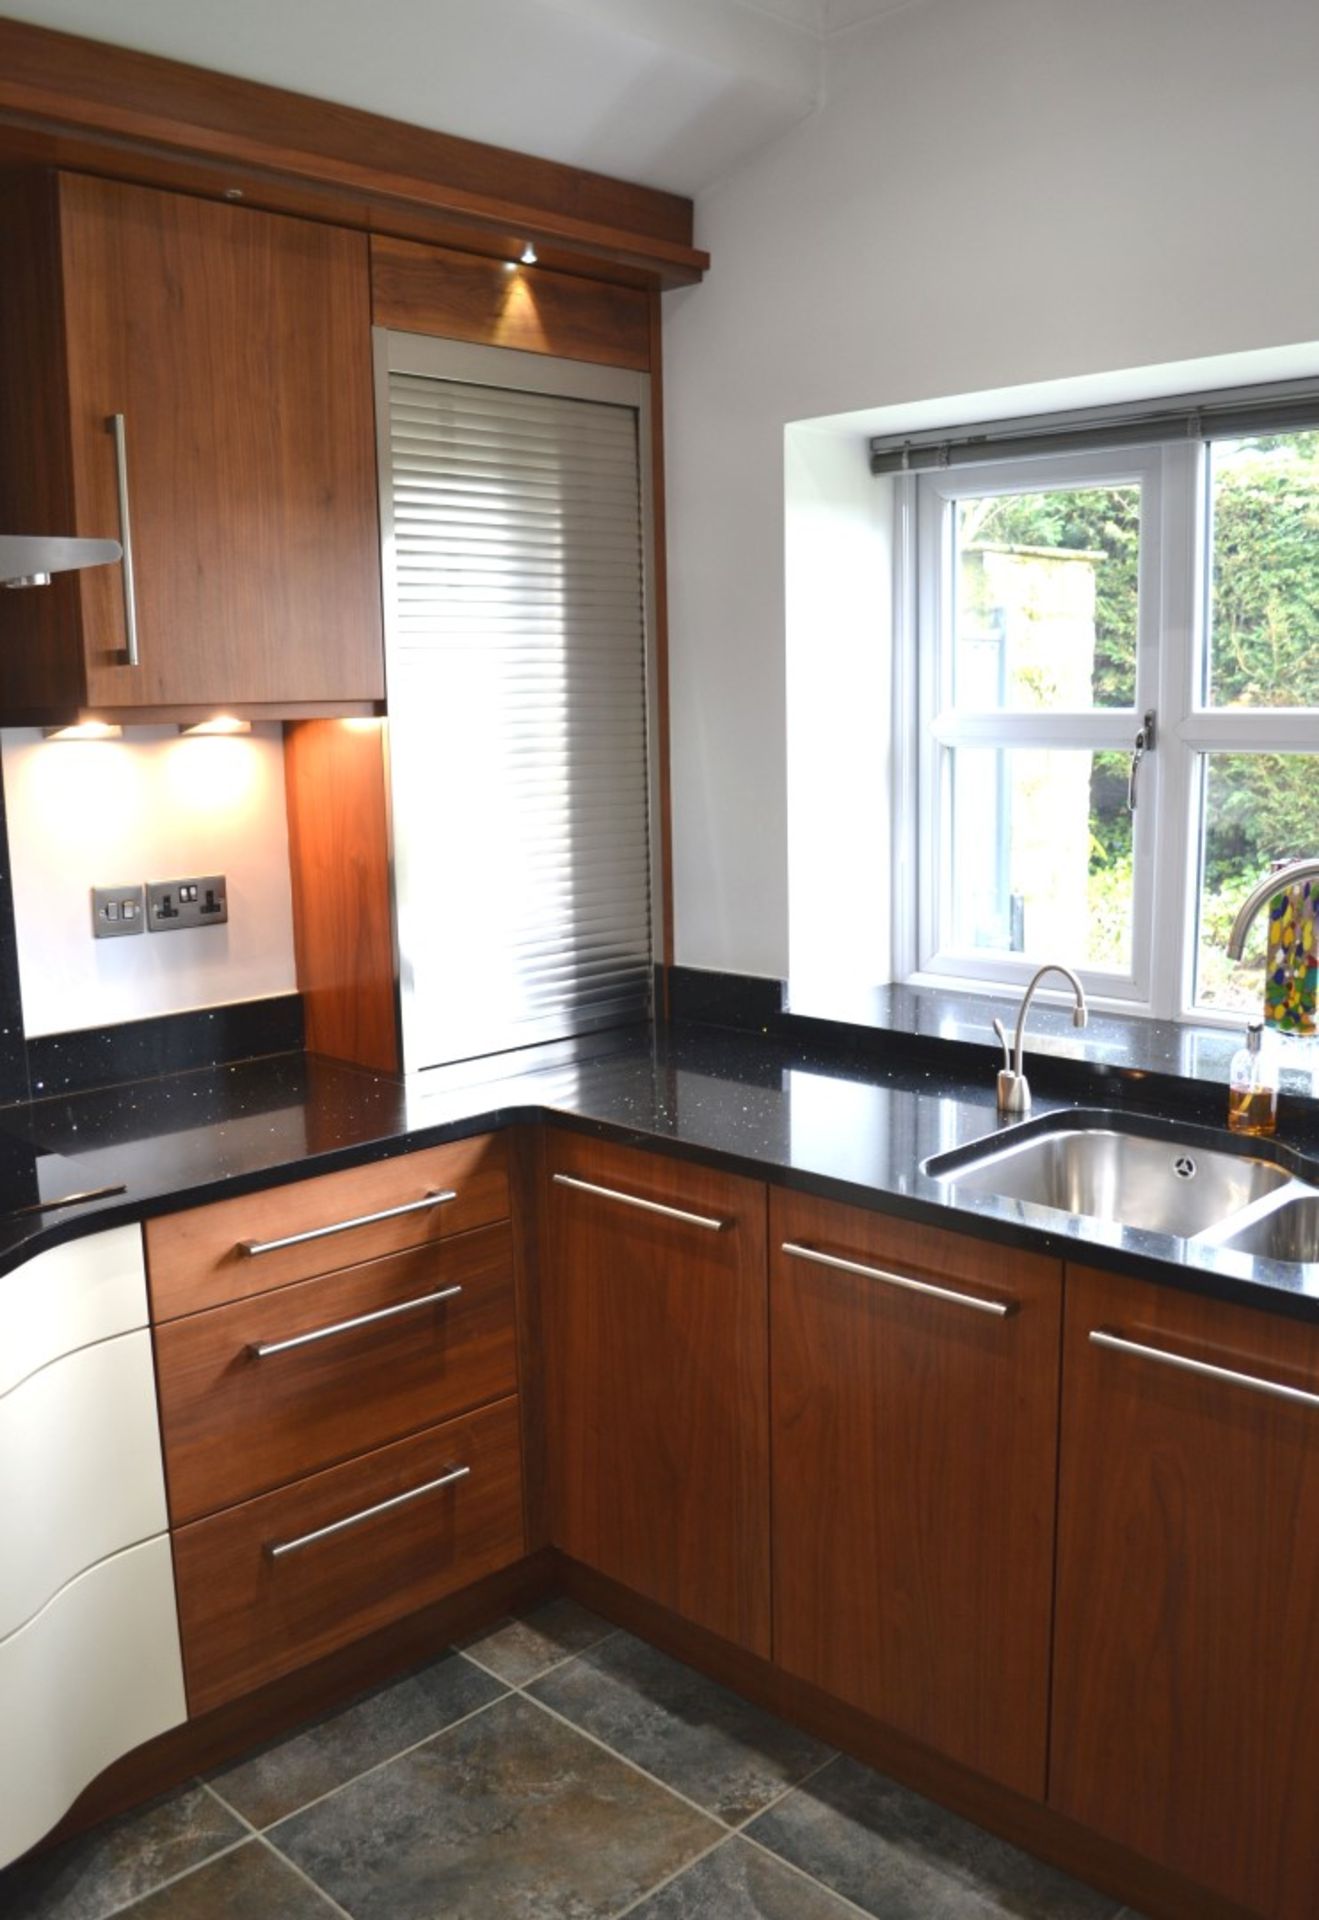 1 x Kitchen Design Bespoke Fitted Kitchen With Silestone Worktops & Neff Appliances - Superb - Image 14 of 59